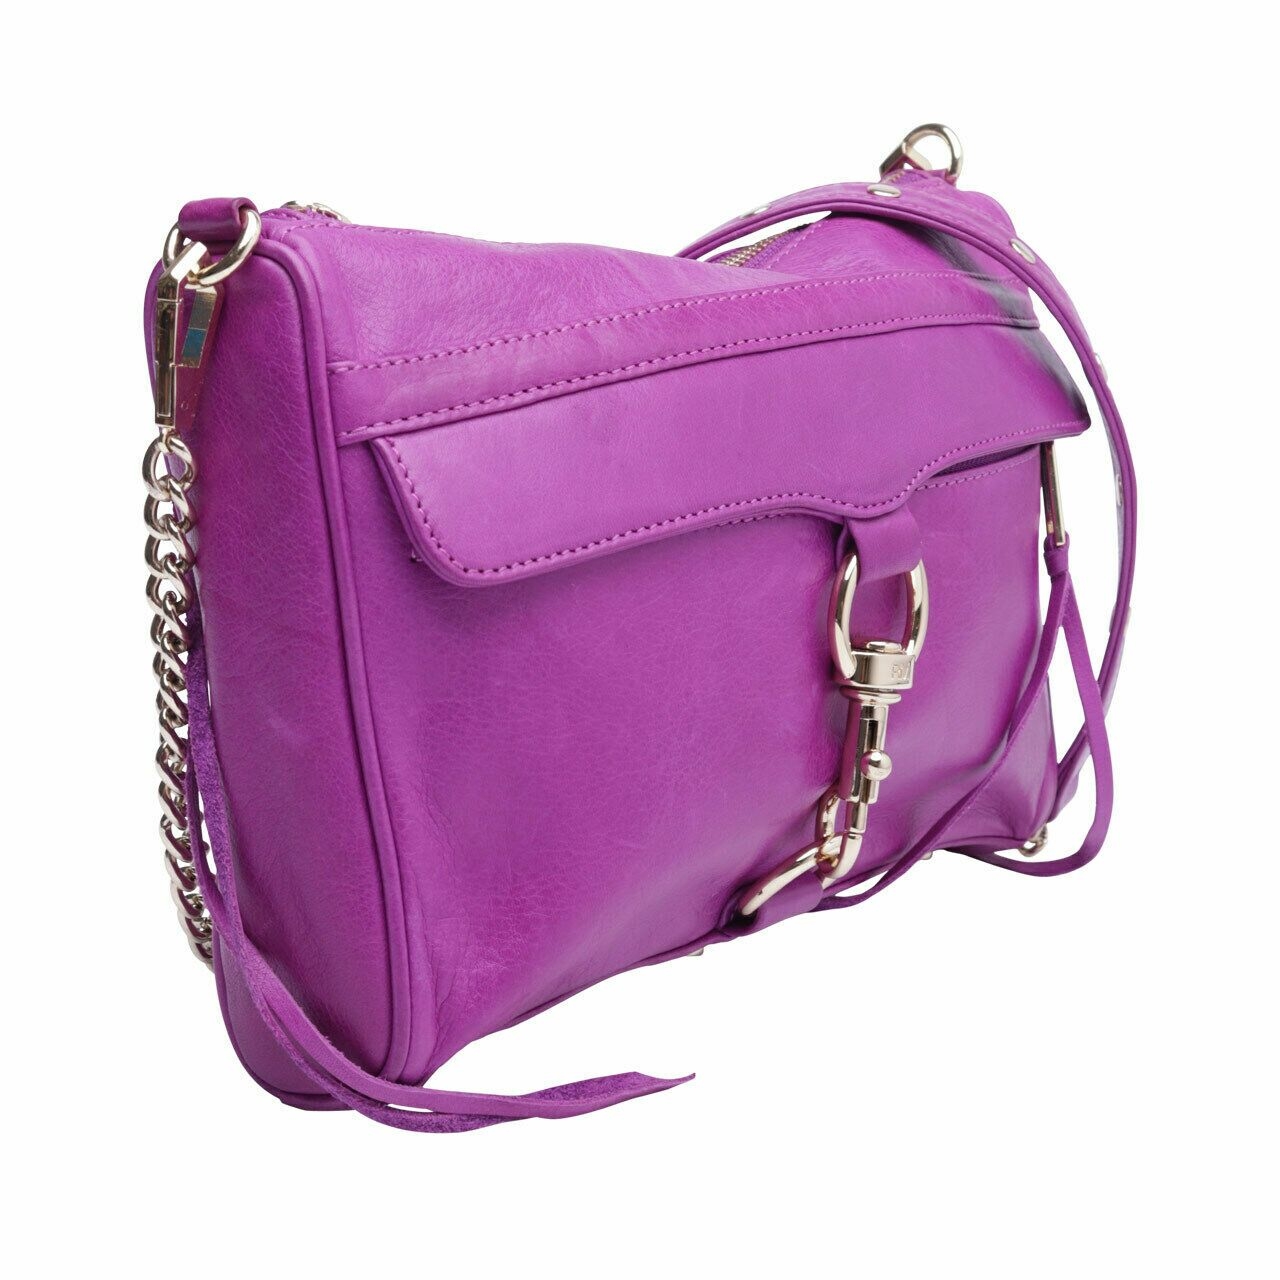 Rebecca Minkoff Purple Leather Sling Bag